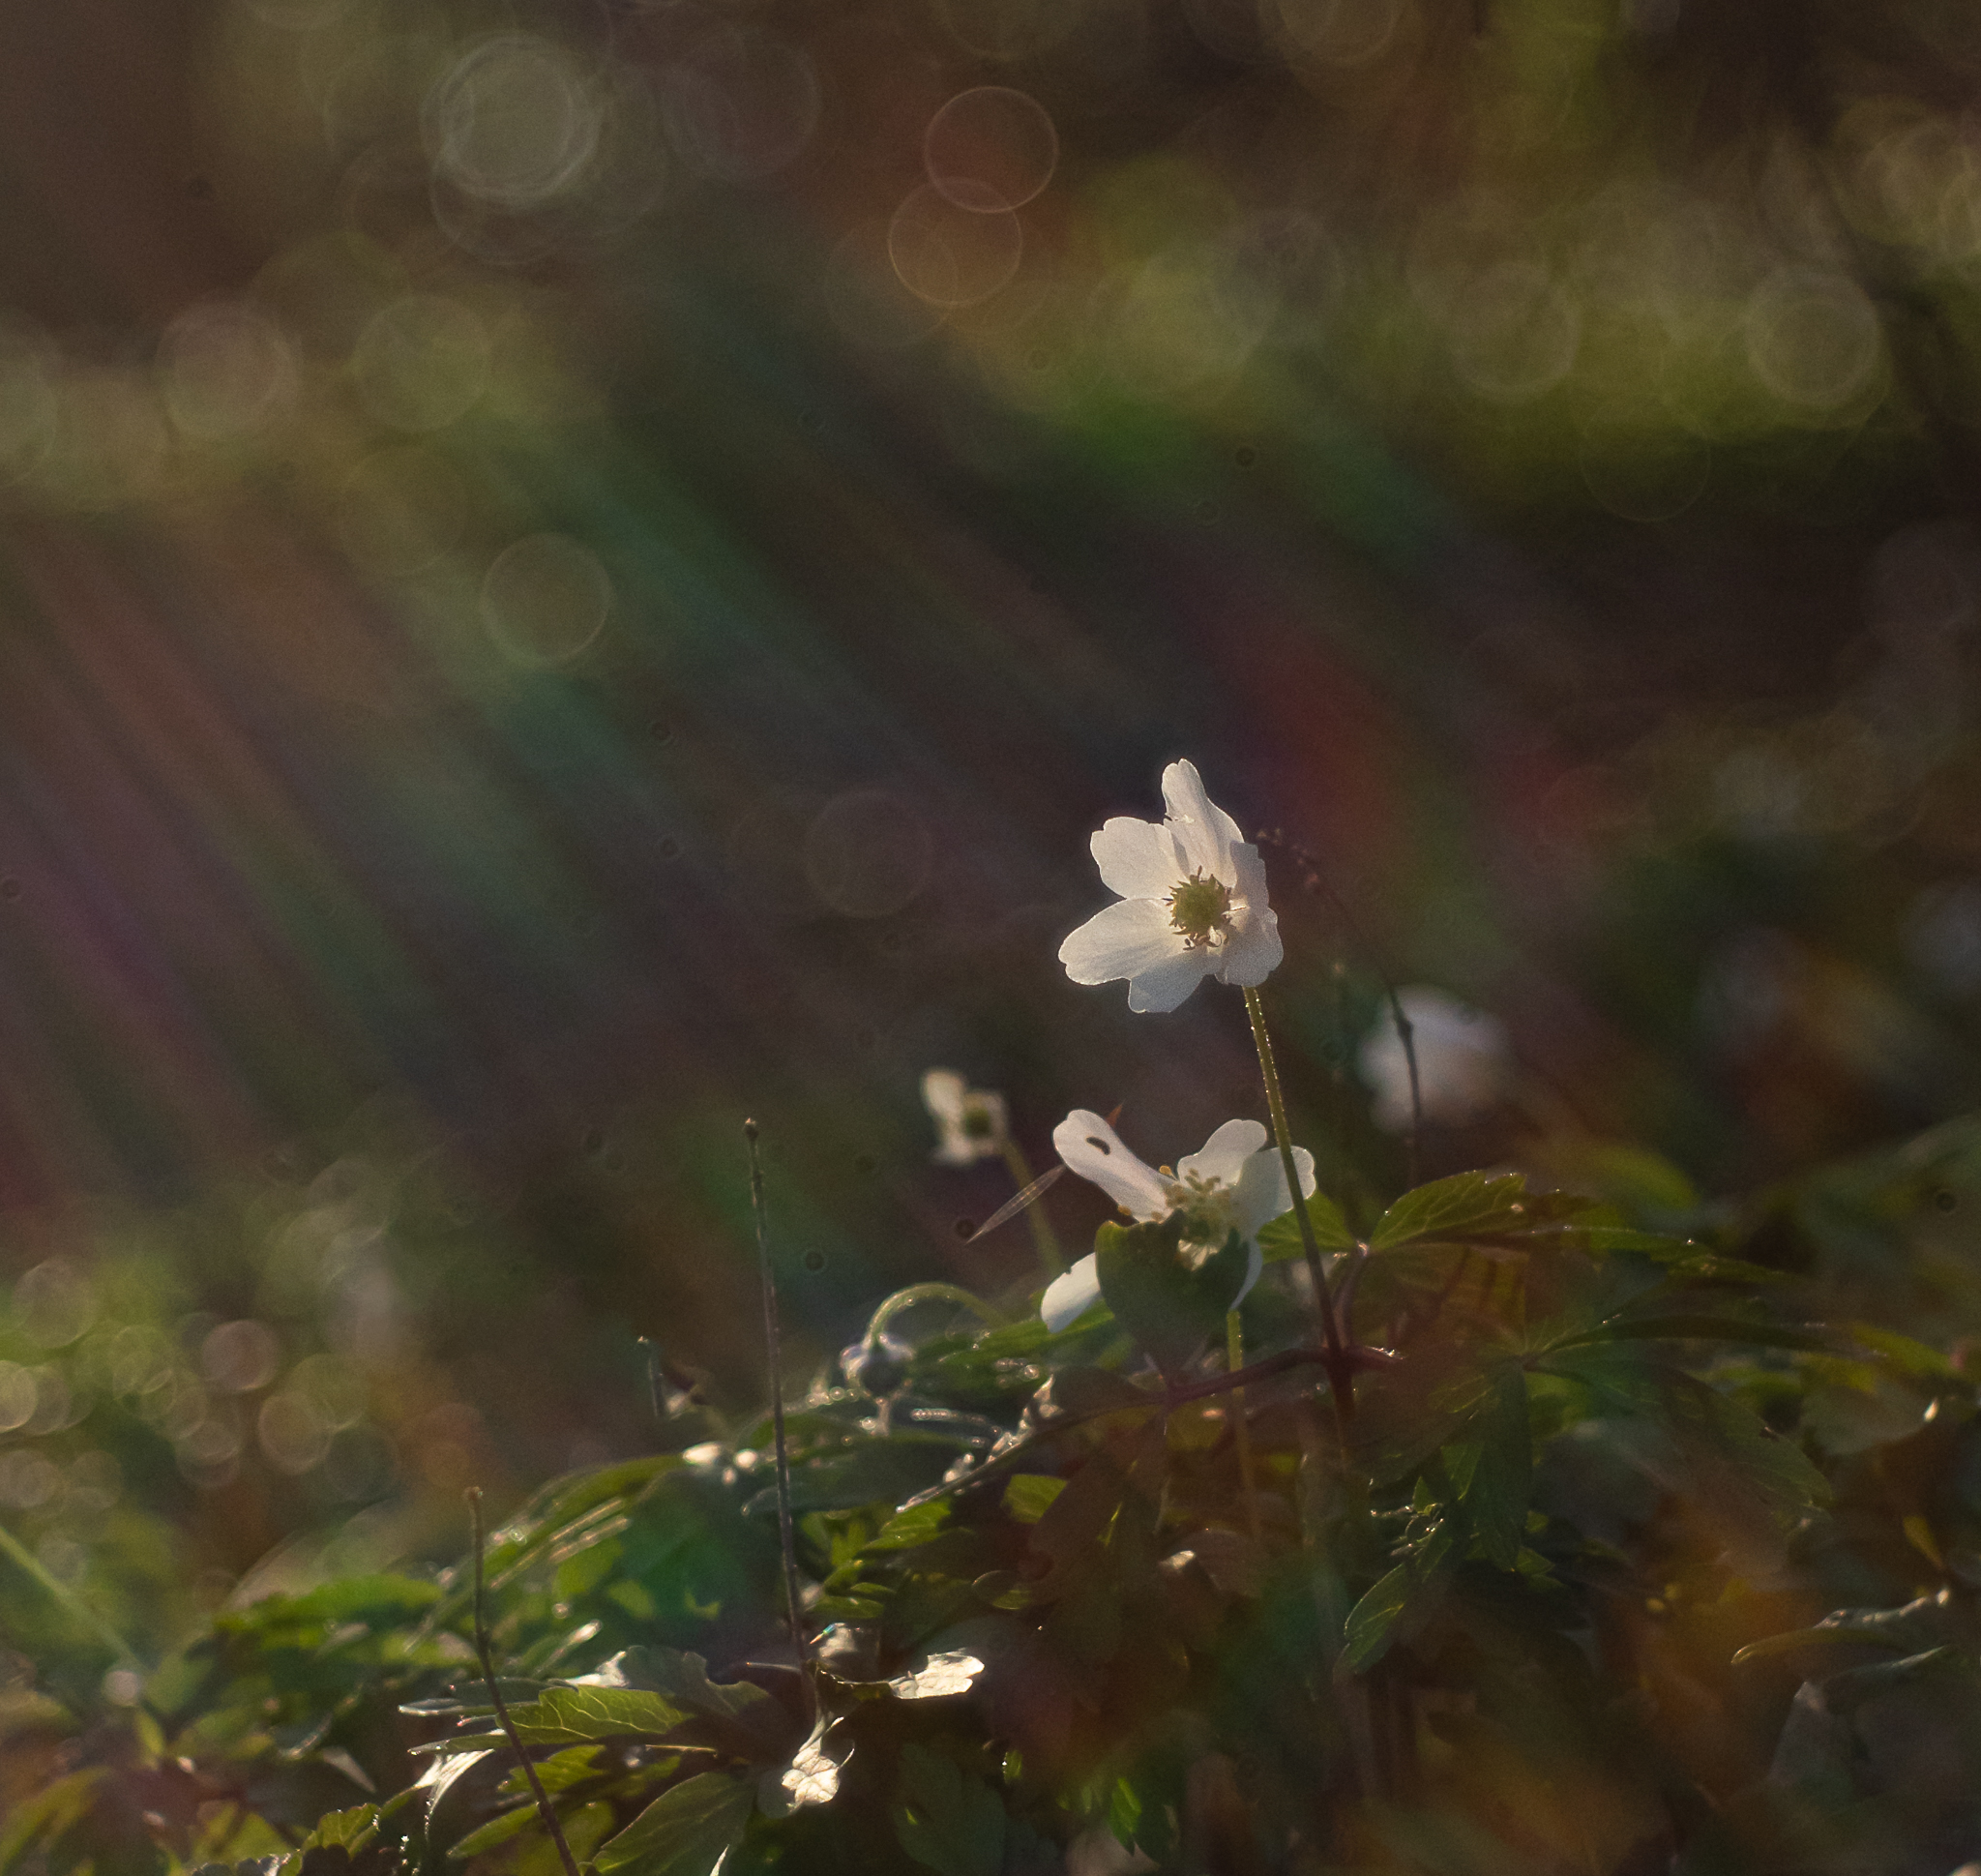 Little flower in the undergrowth (light bath)...